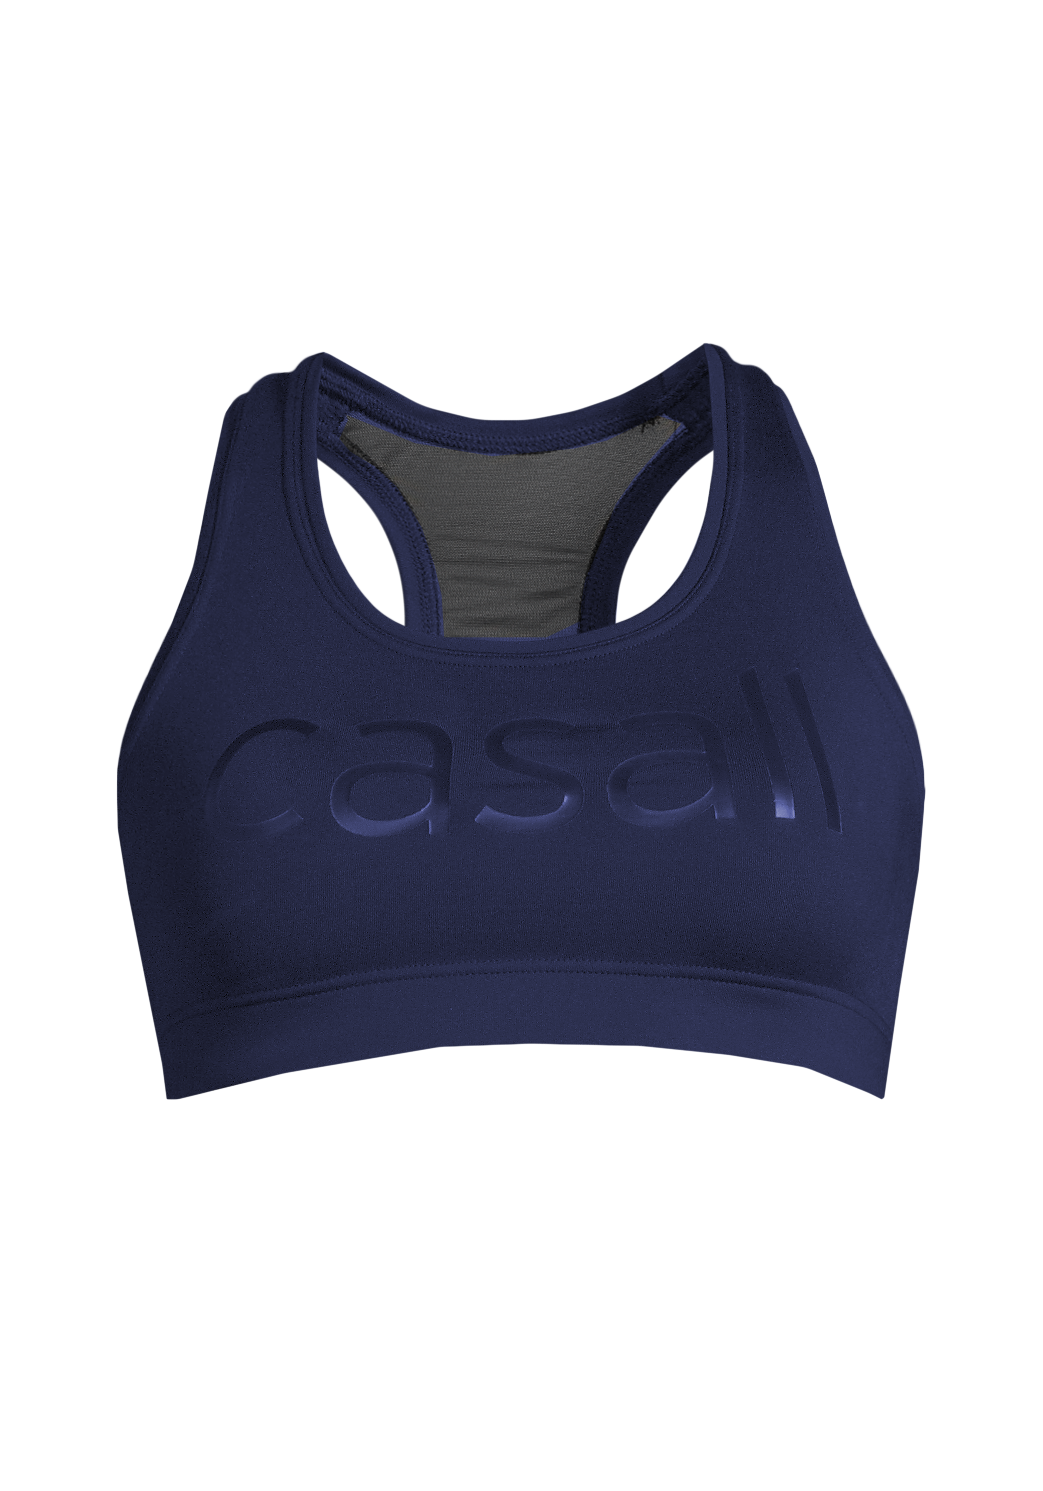 Casall Iconic wool sports bra – Hero blue